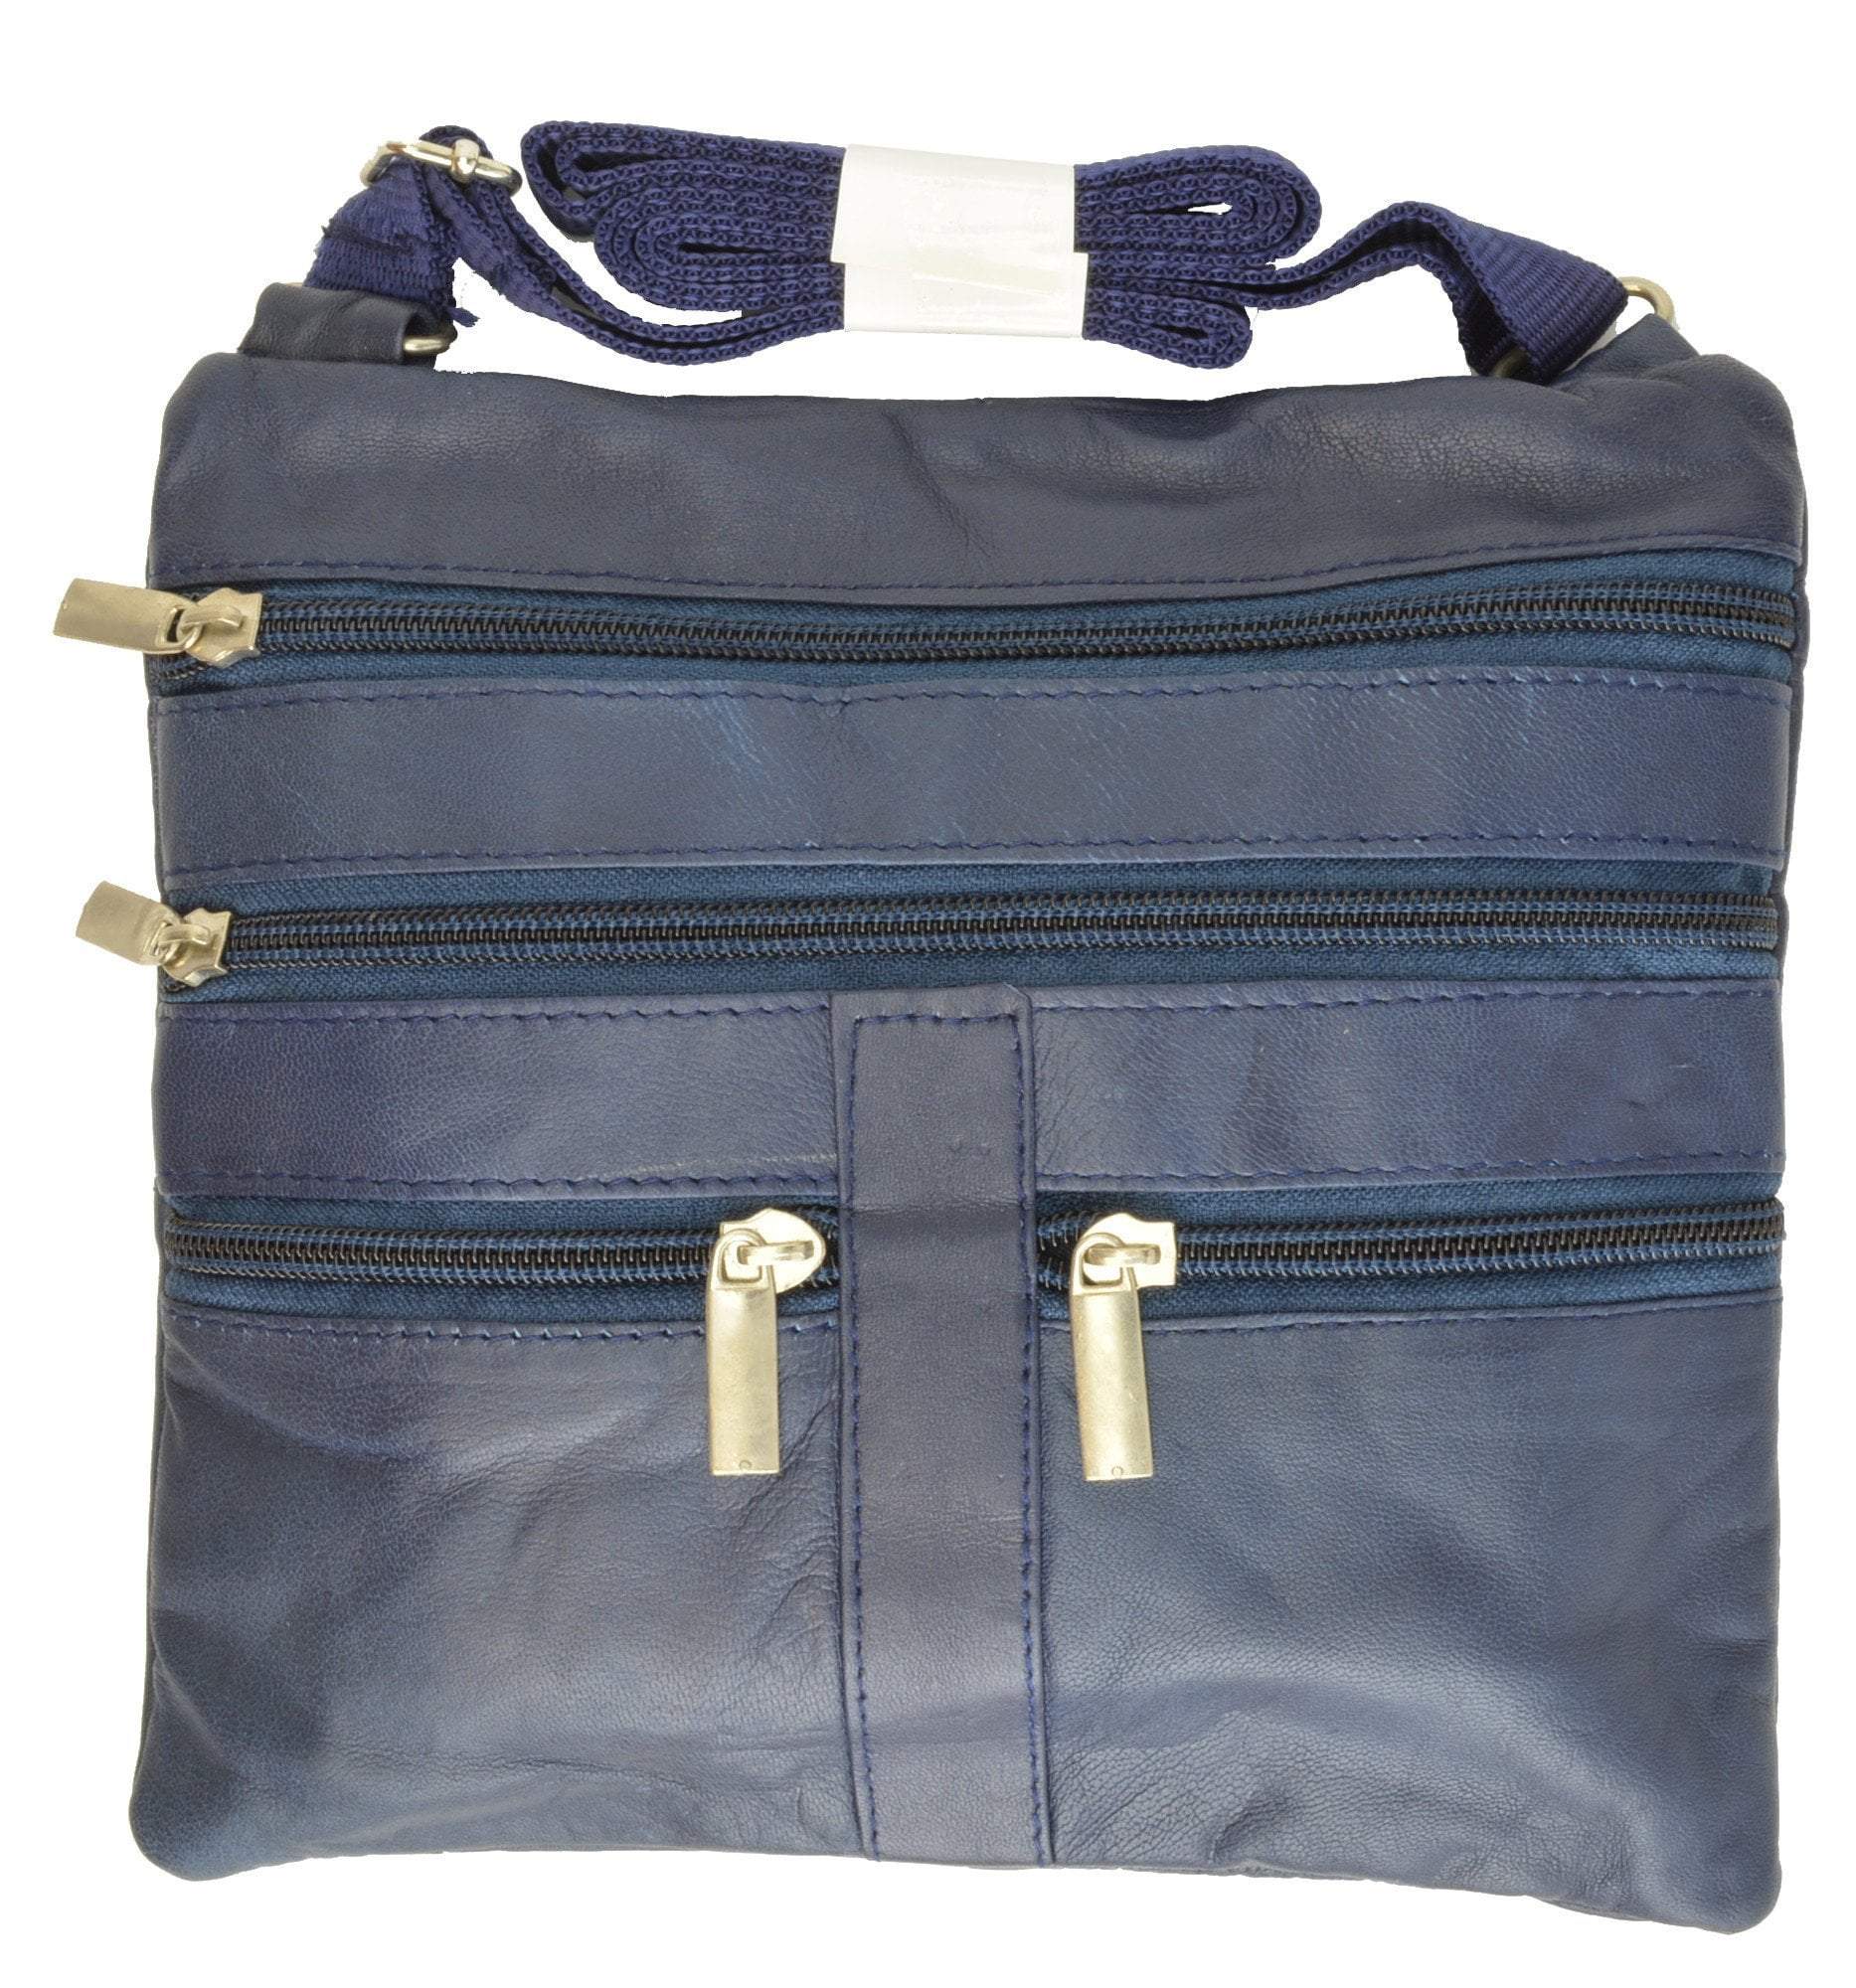 Woman's Medium Navy Blue Crossbody Bag Purse NWT | eBay